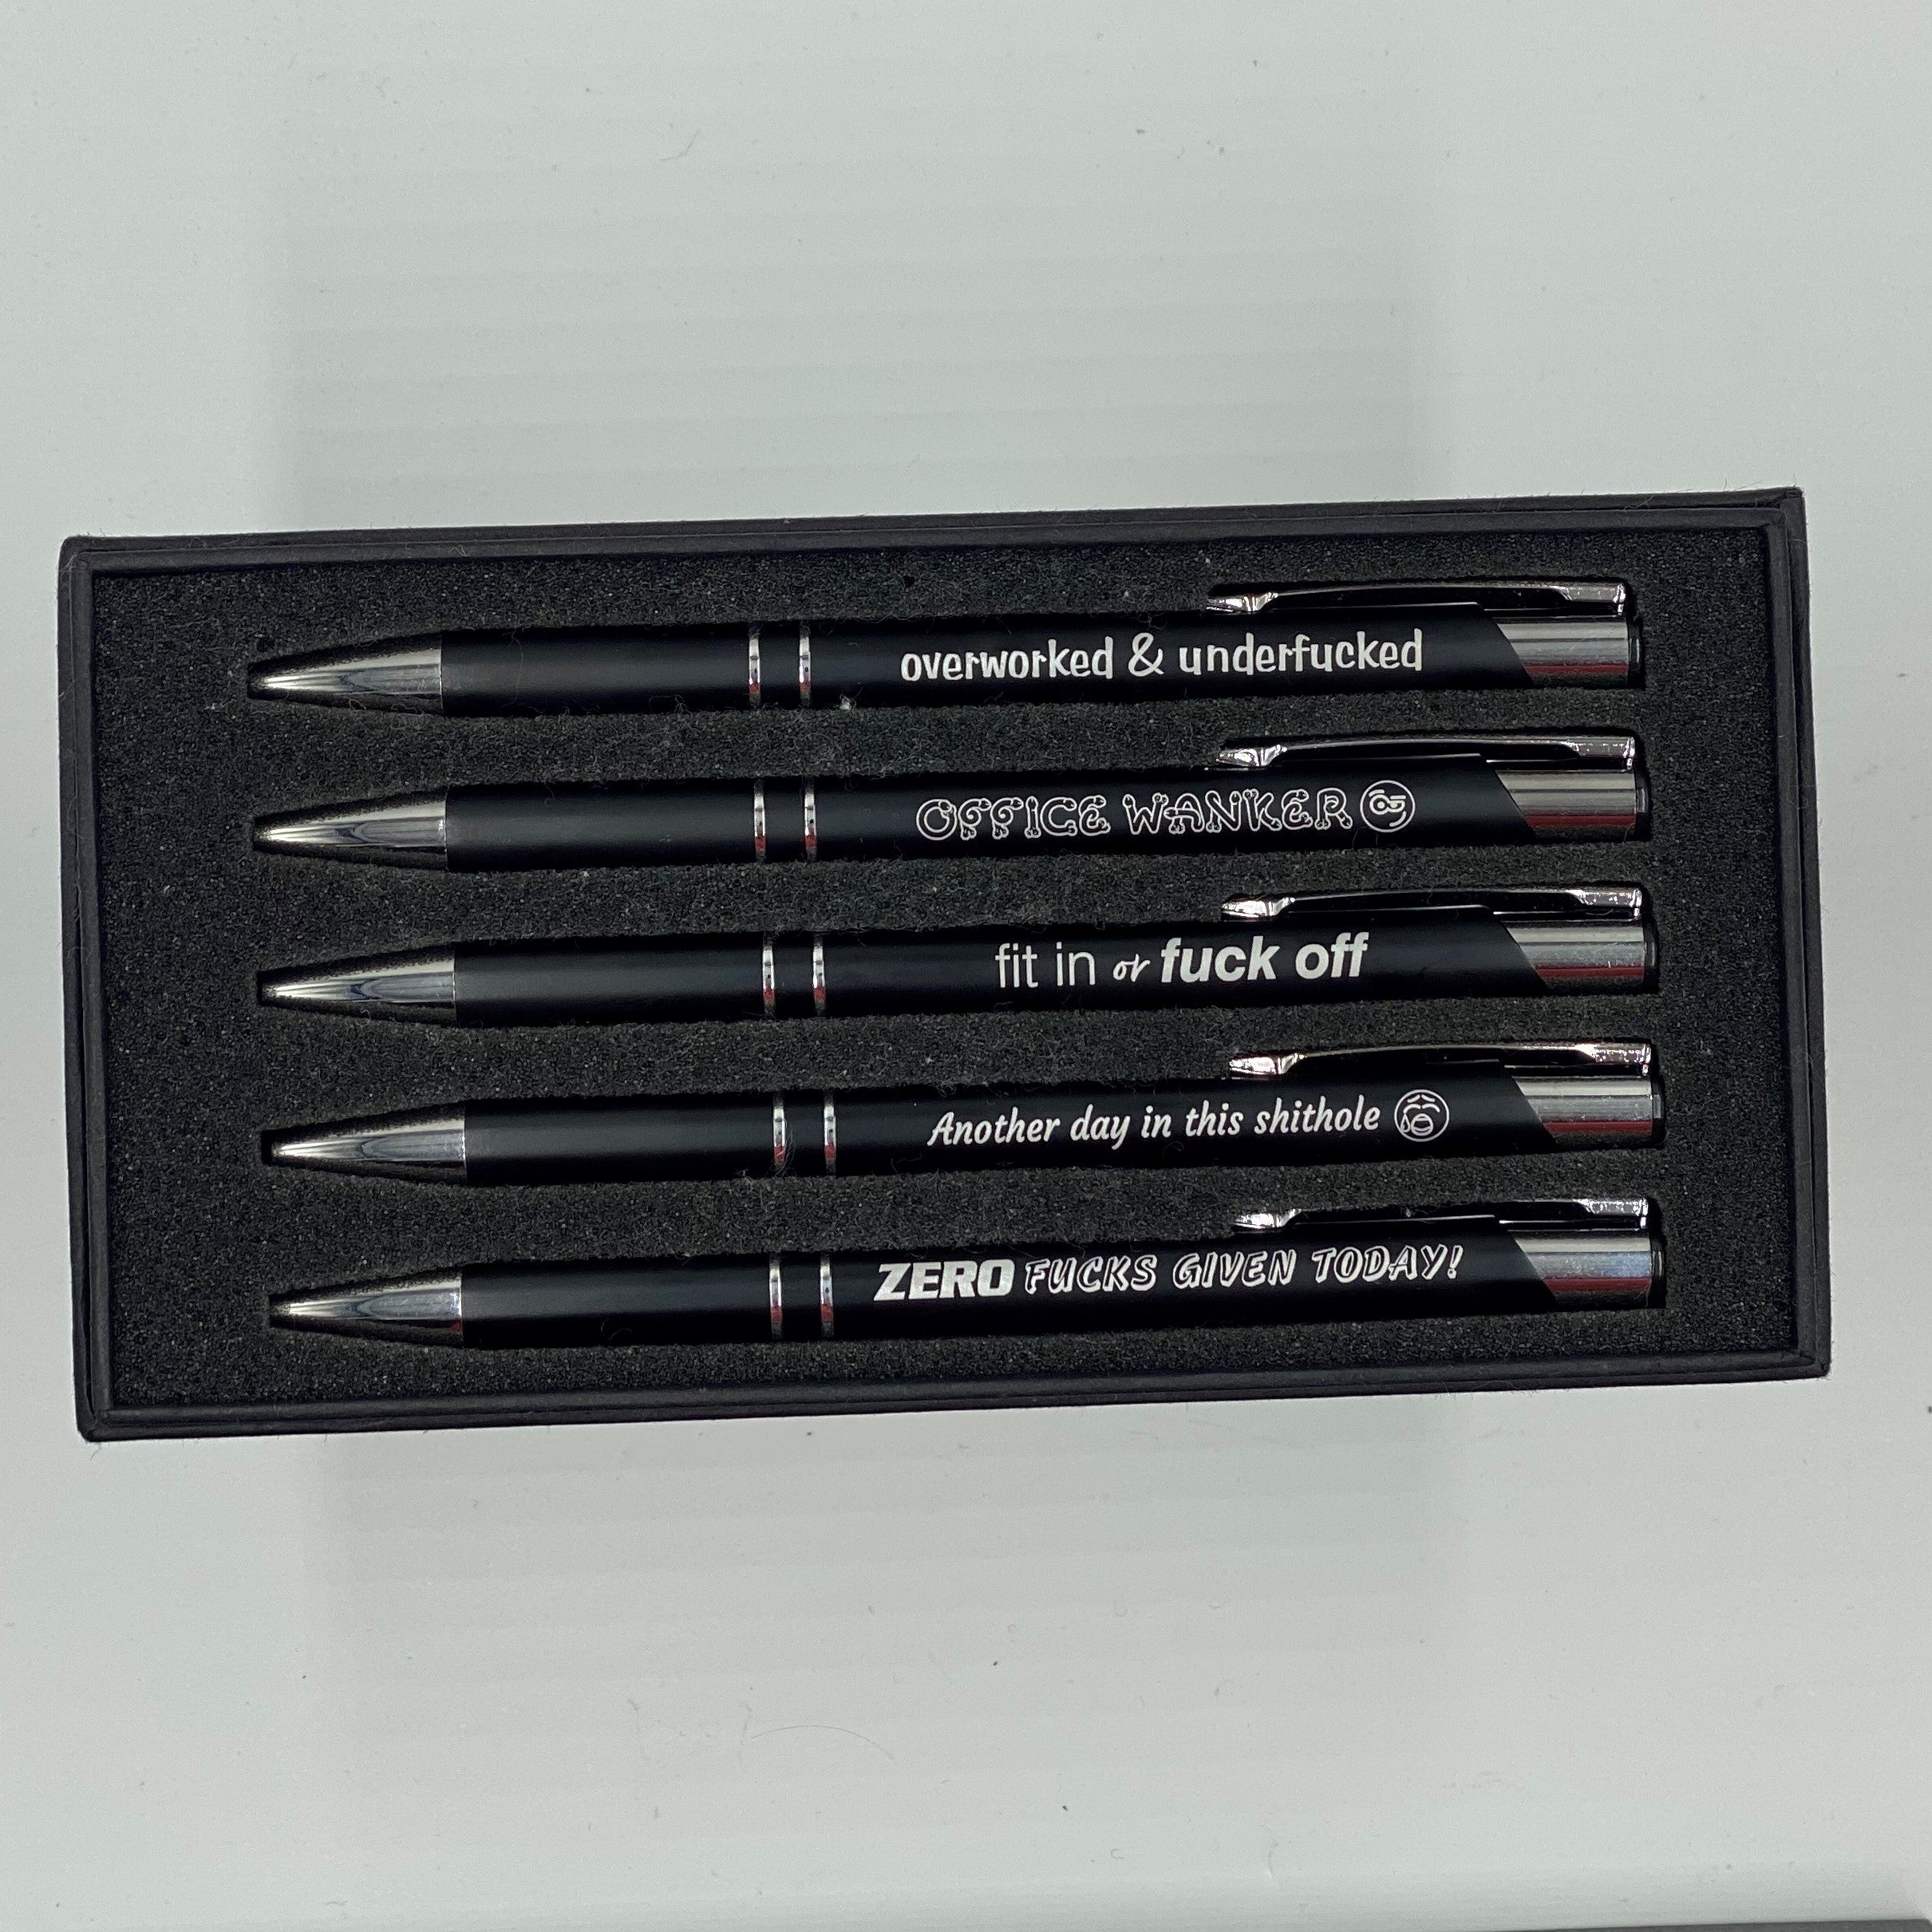 Office Essential 5 Pen Pack